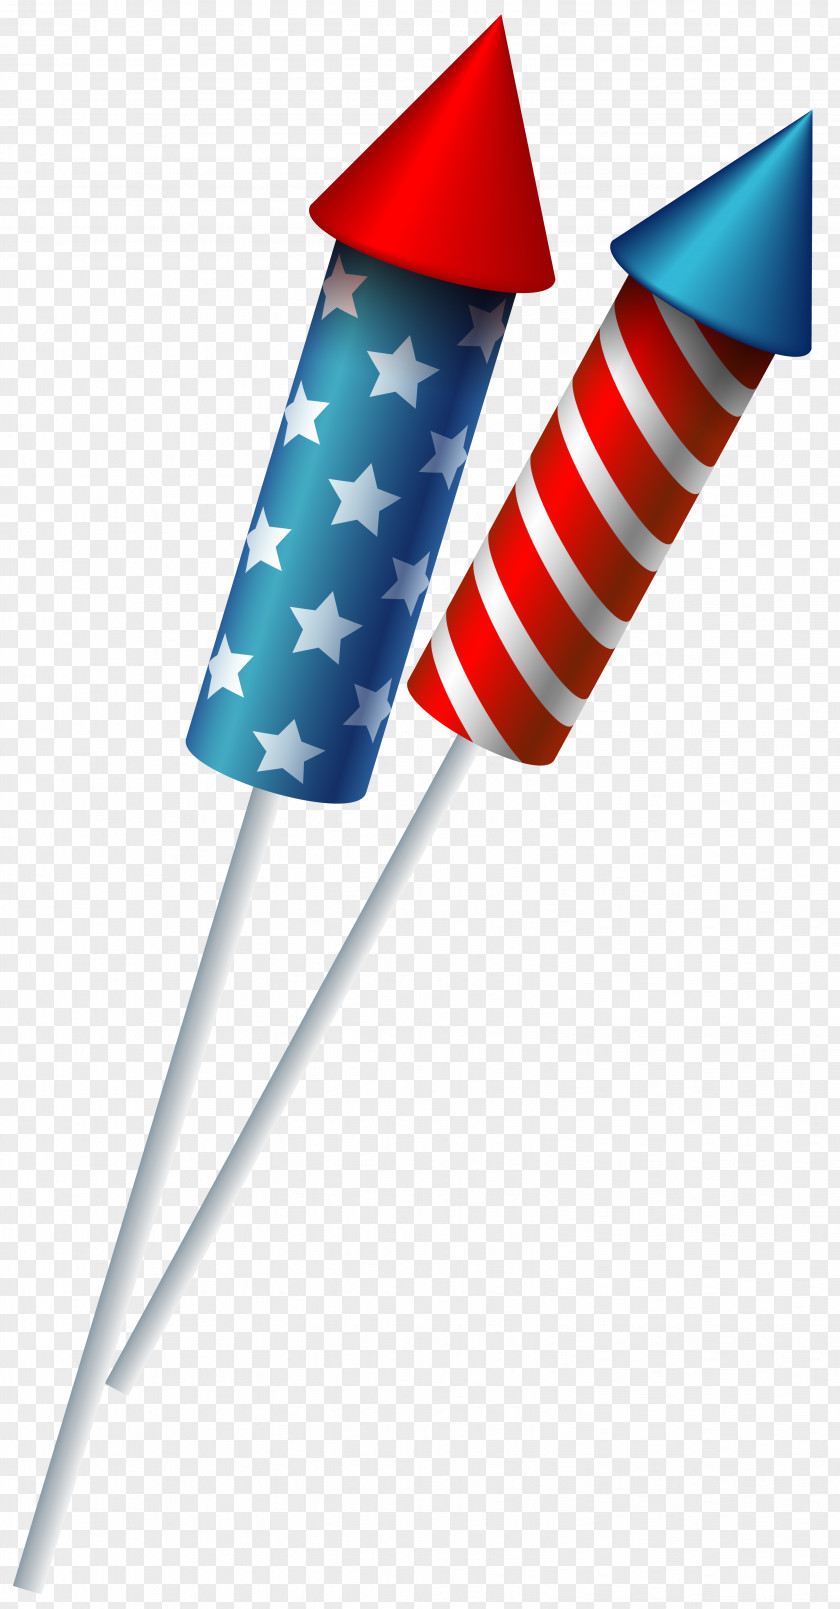 Sparkler Cliparts United States Independence Day Fireworks Clip Art PNG